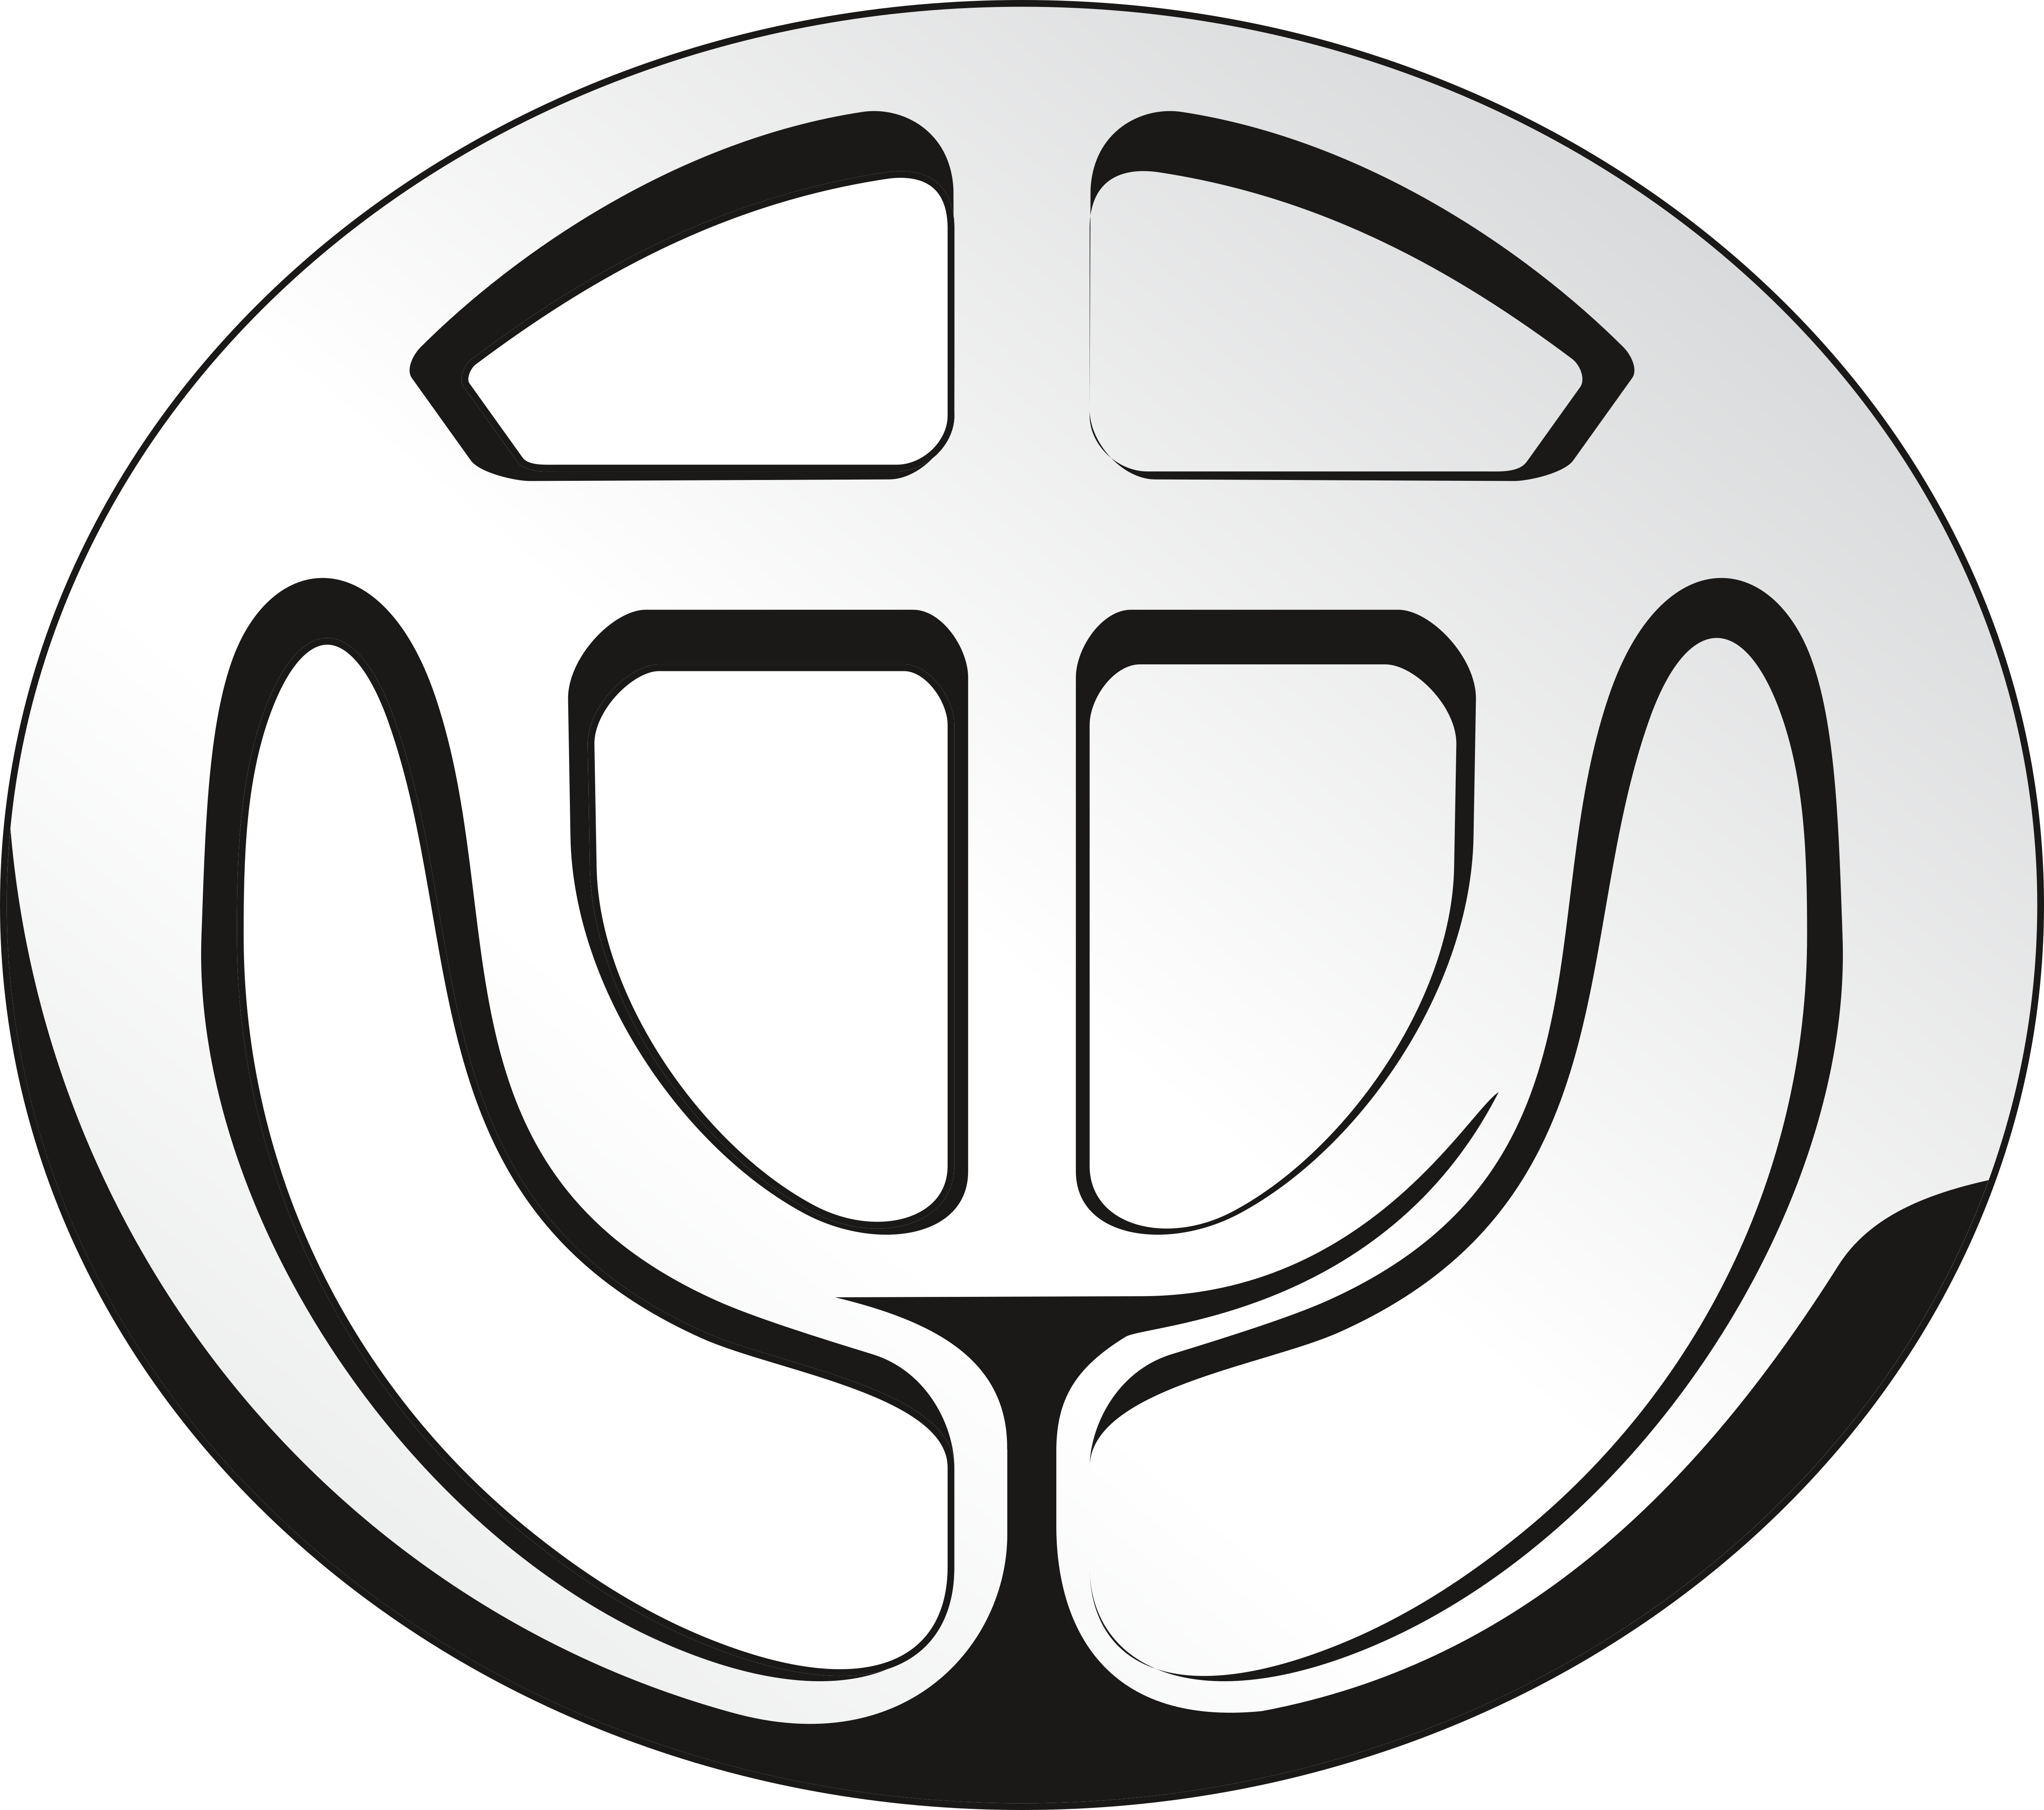 chinese car logo